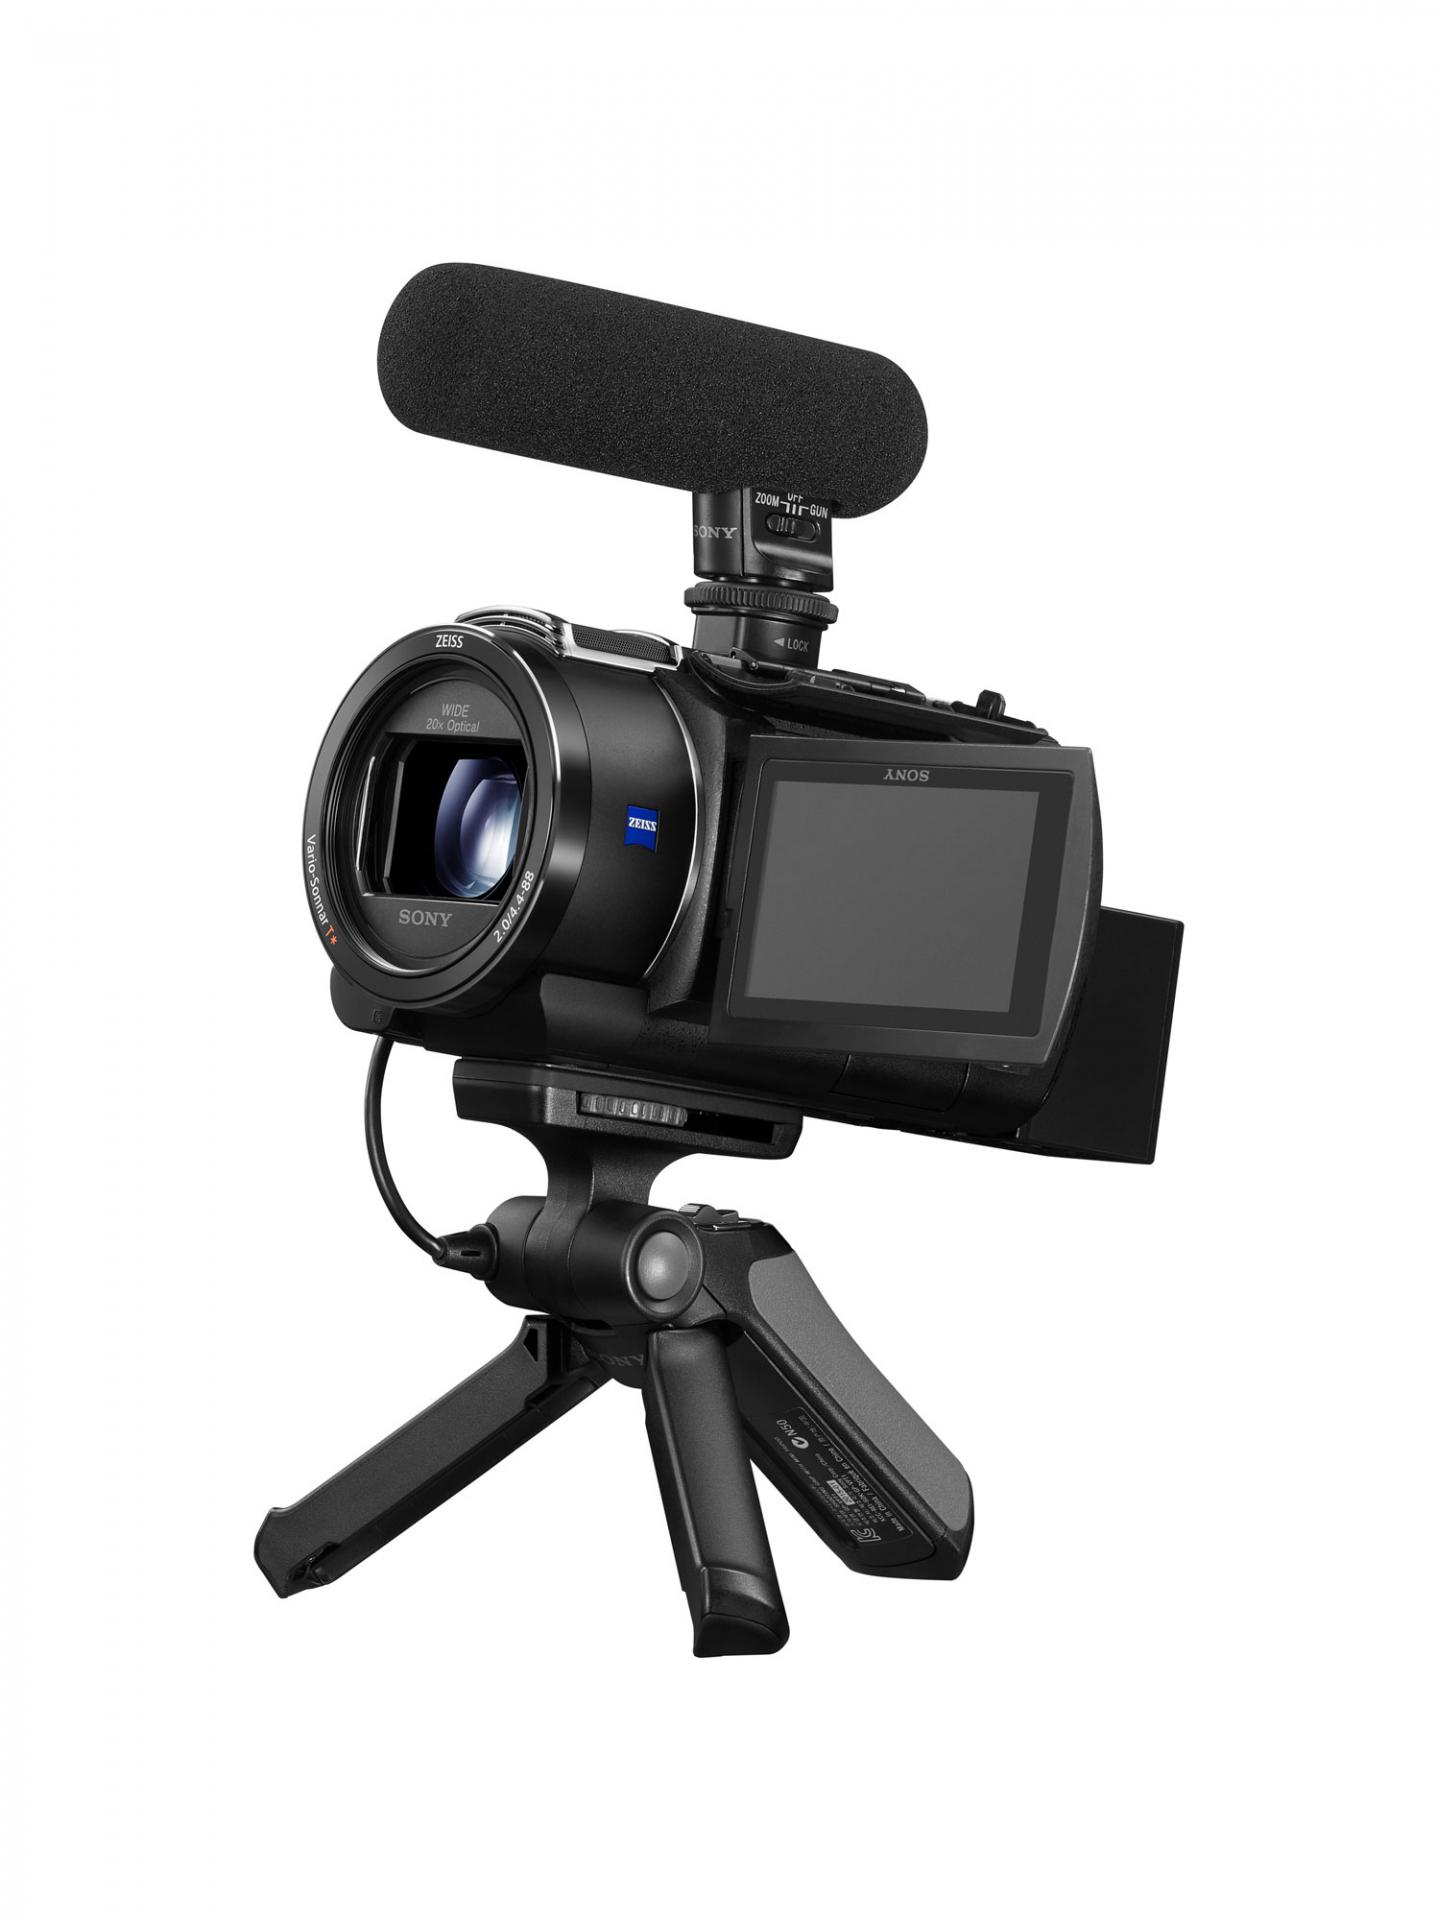 Sony анонсировала продвинутую камеру HandyCam FDR-AX43